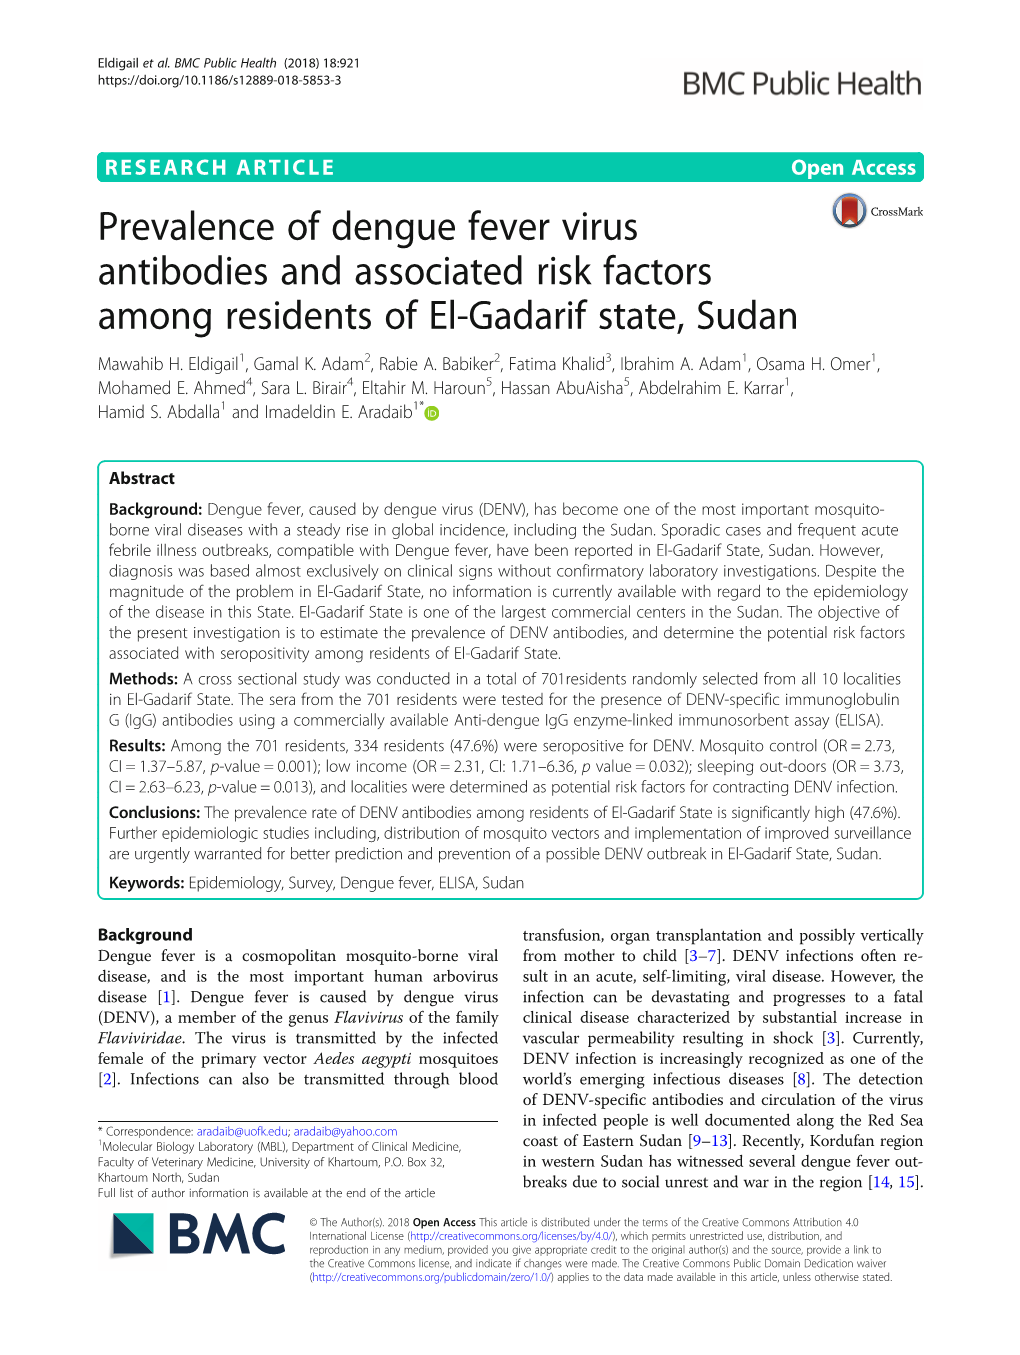 Prevalence of Dengue Fever Virus Antibodies and Associated Risk Factors Among Residents of El-Gadarif State, Sudan Mawahib H